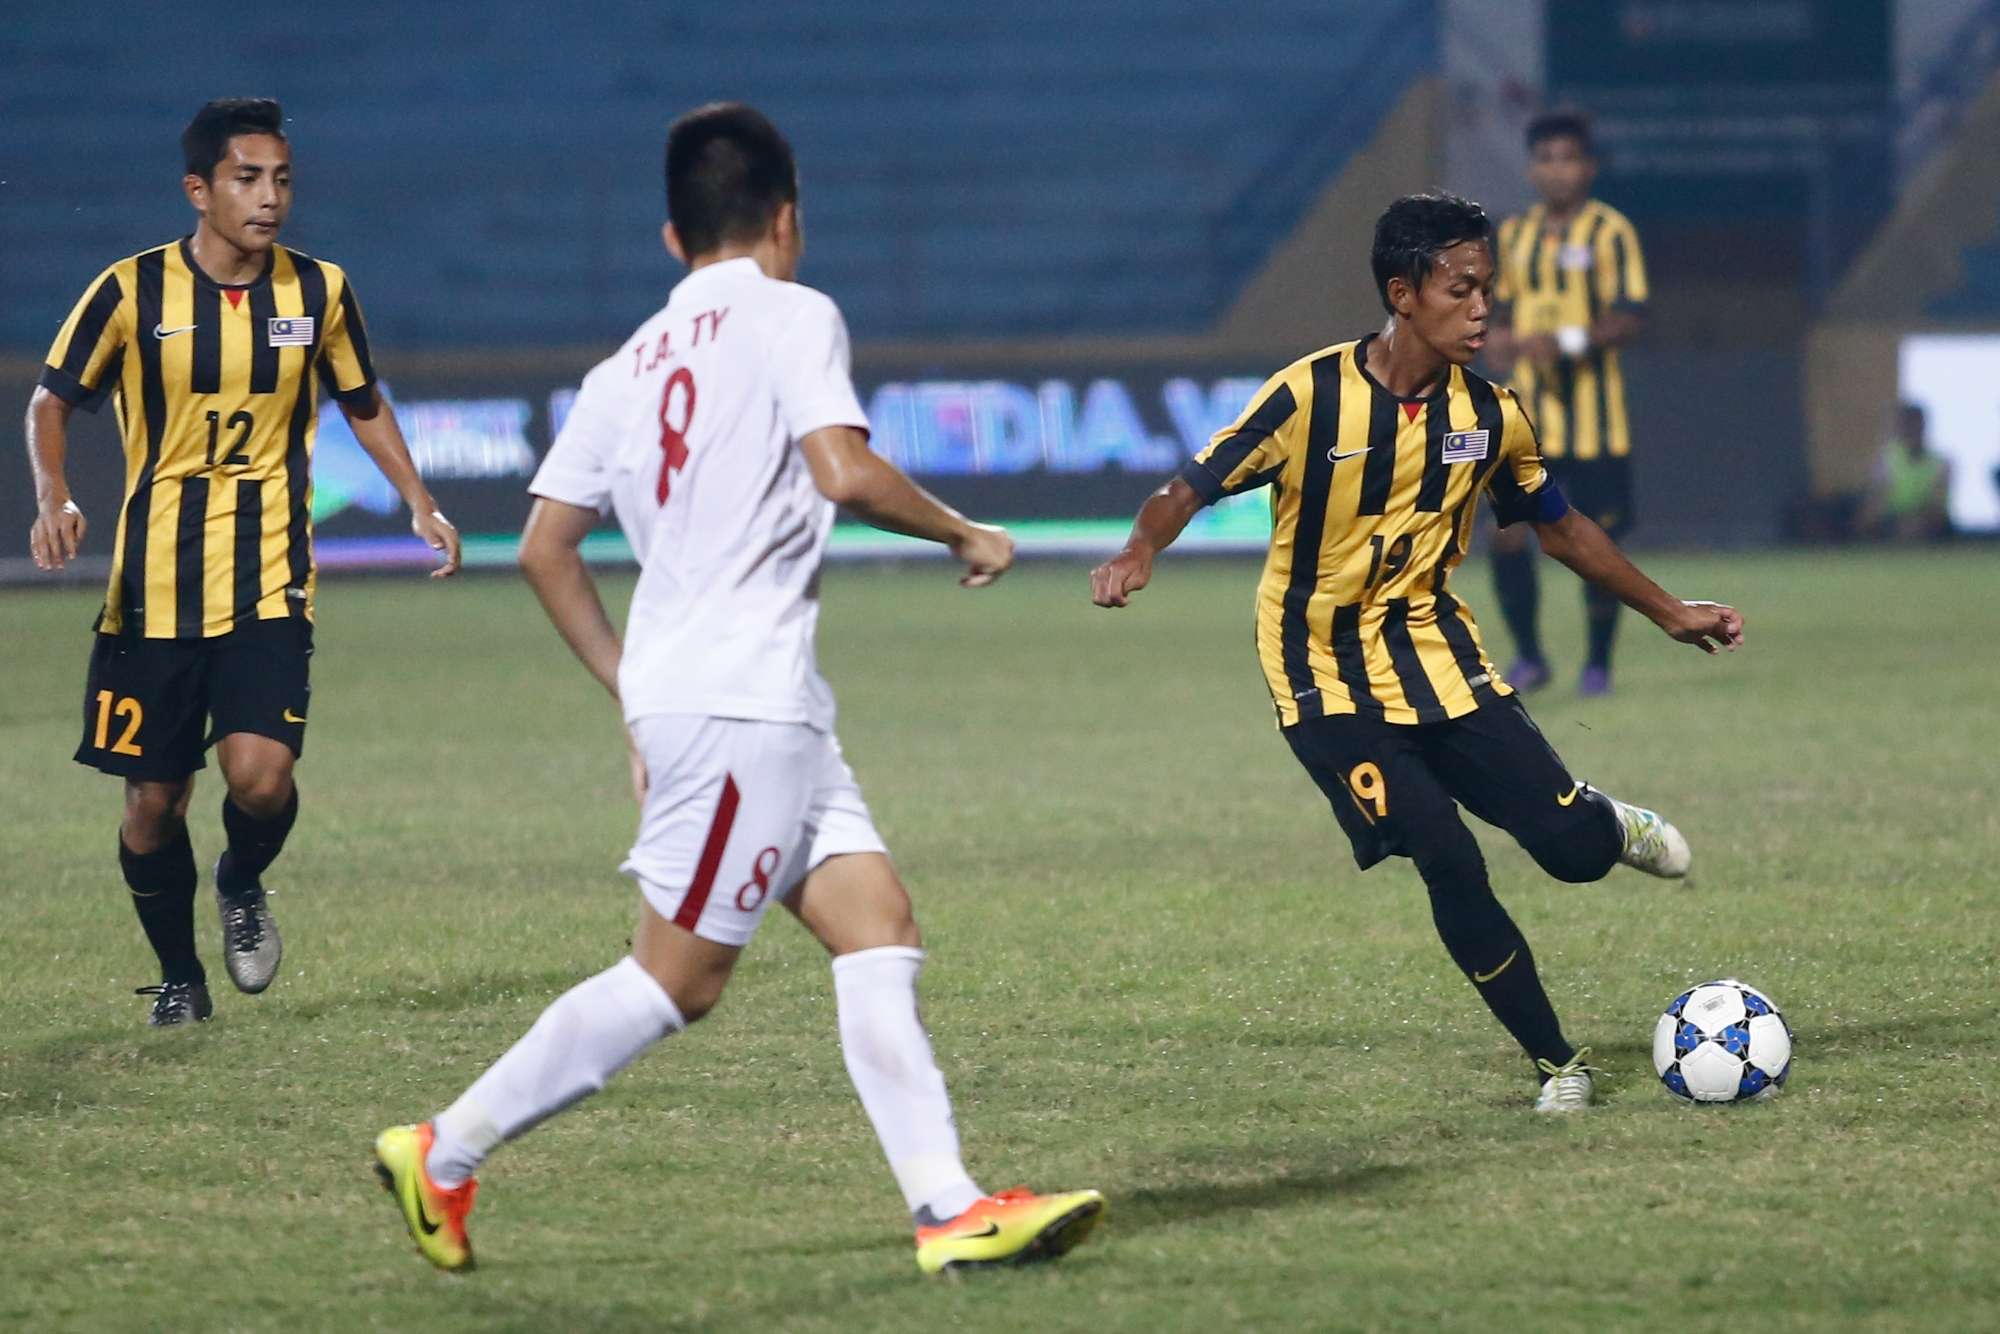 Malaysia U19's Syahmi Safari (19) dribbles the ball 19/9/2016